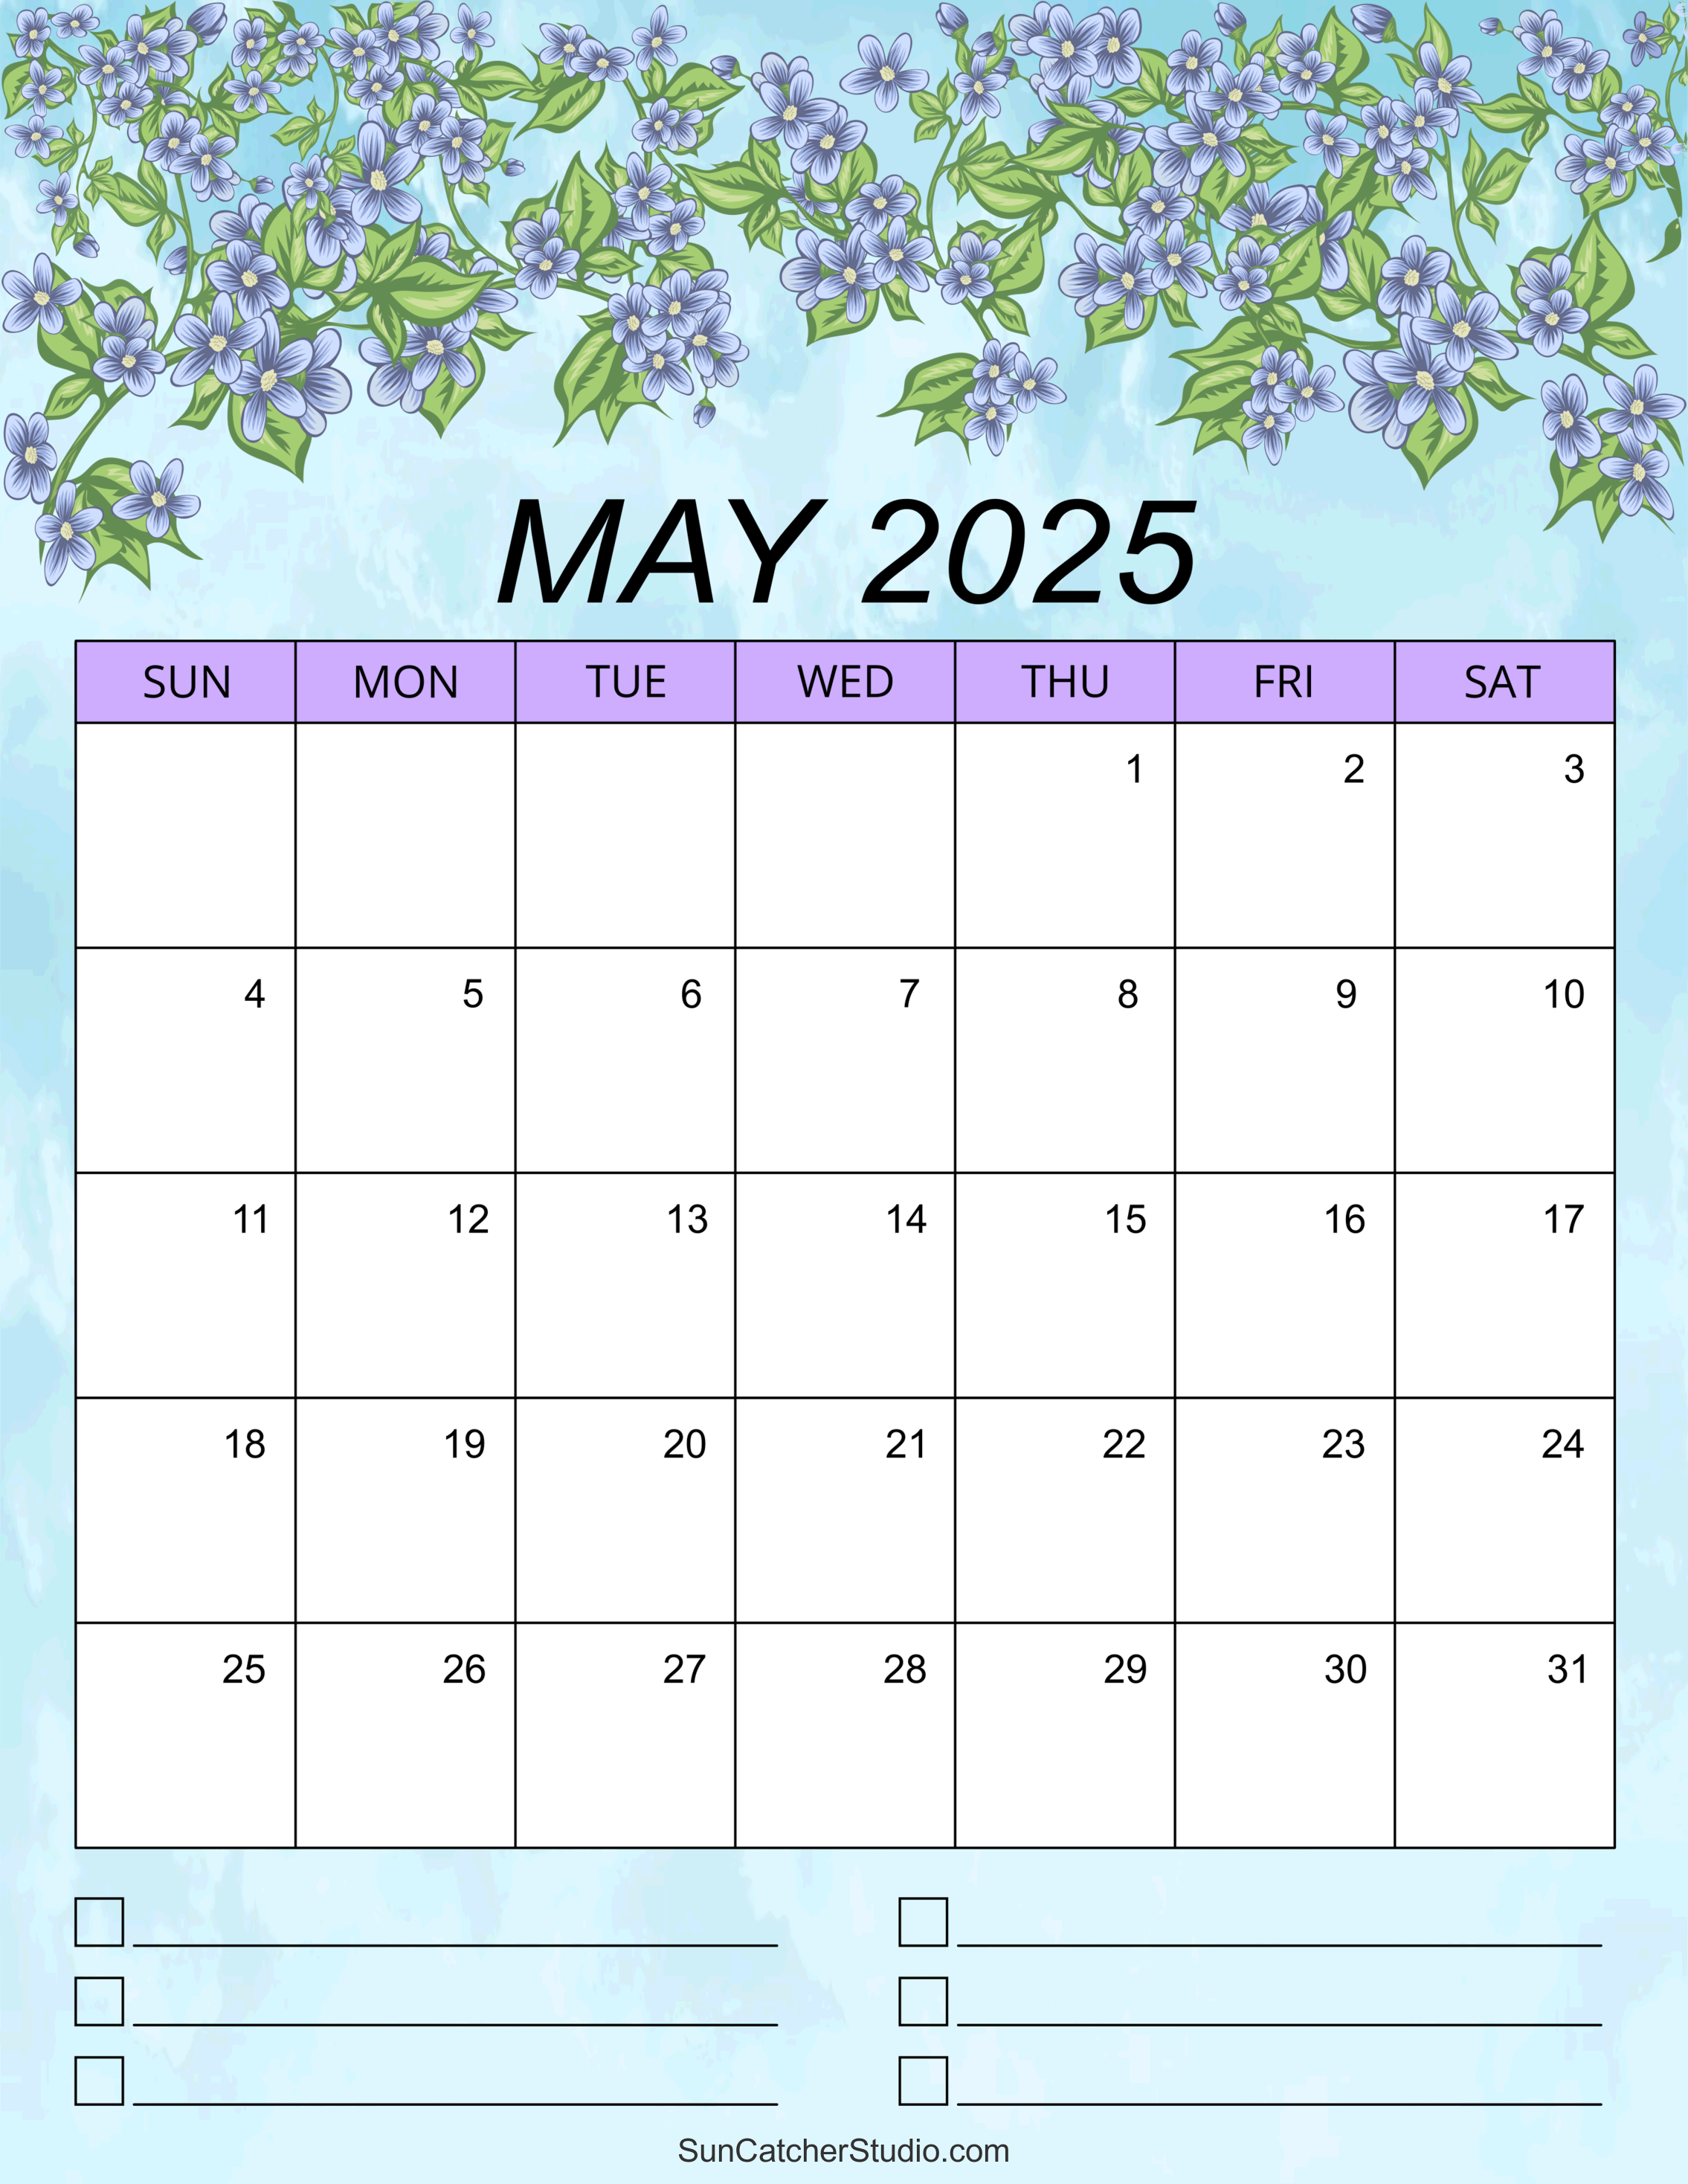 May 2025 Printable Calendar With Cute Design bambi matilda